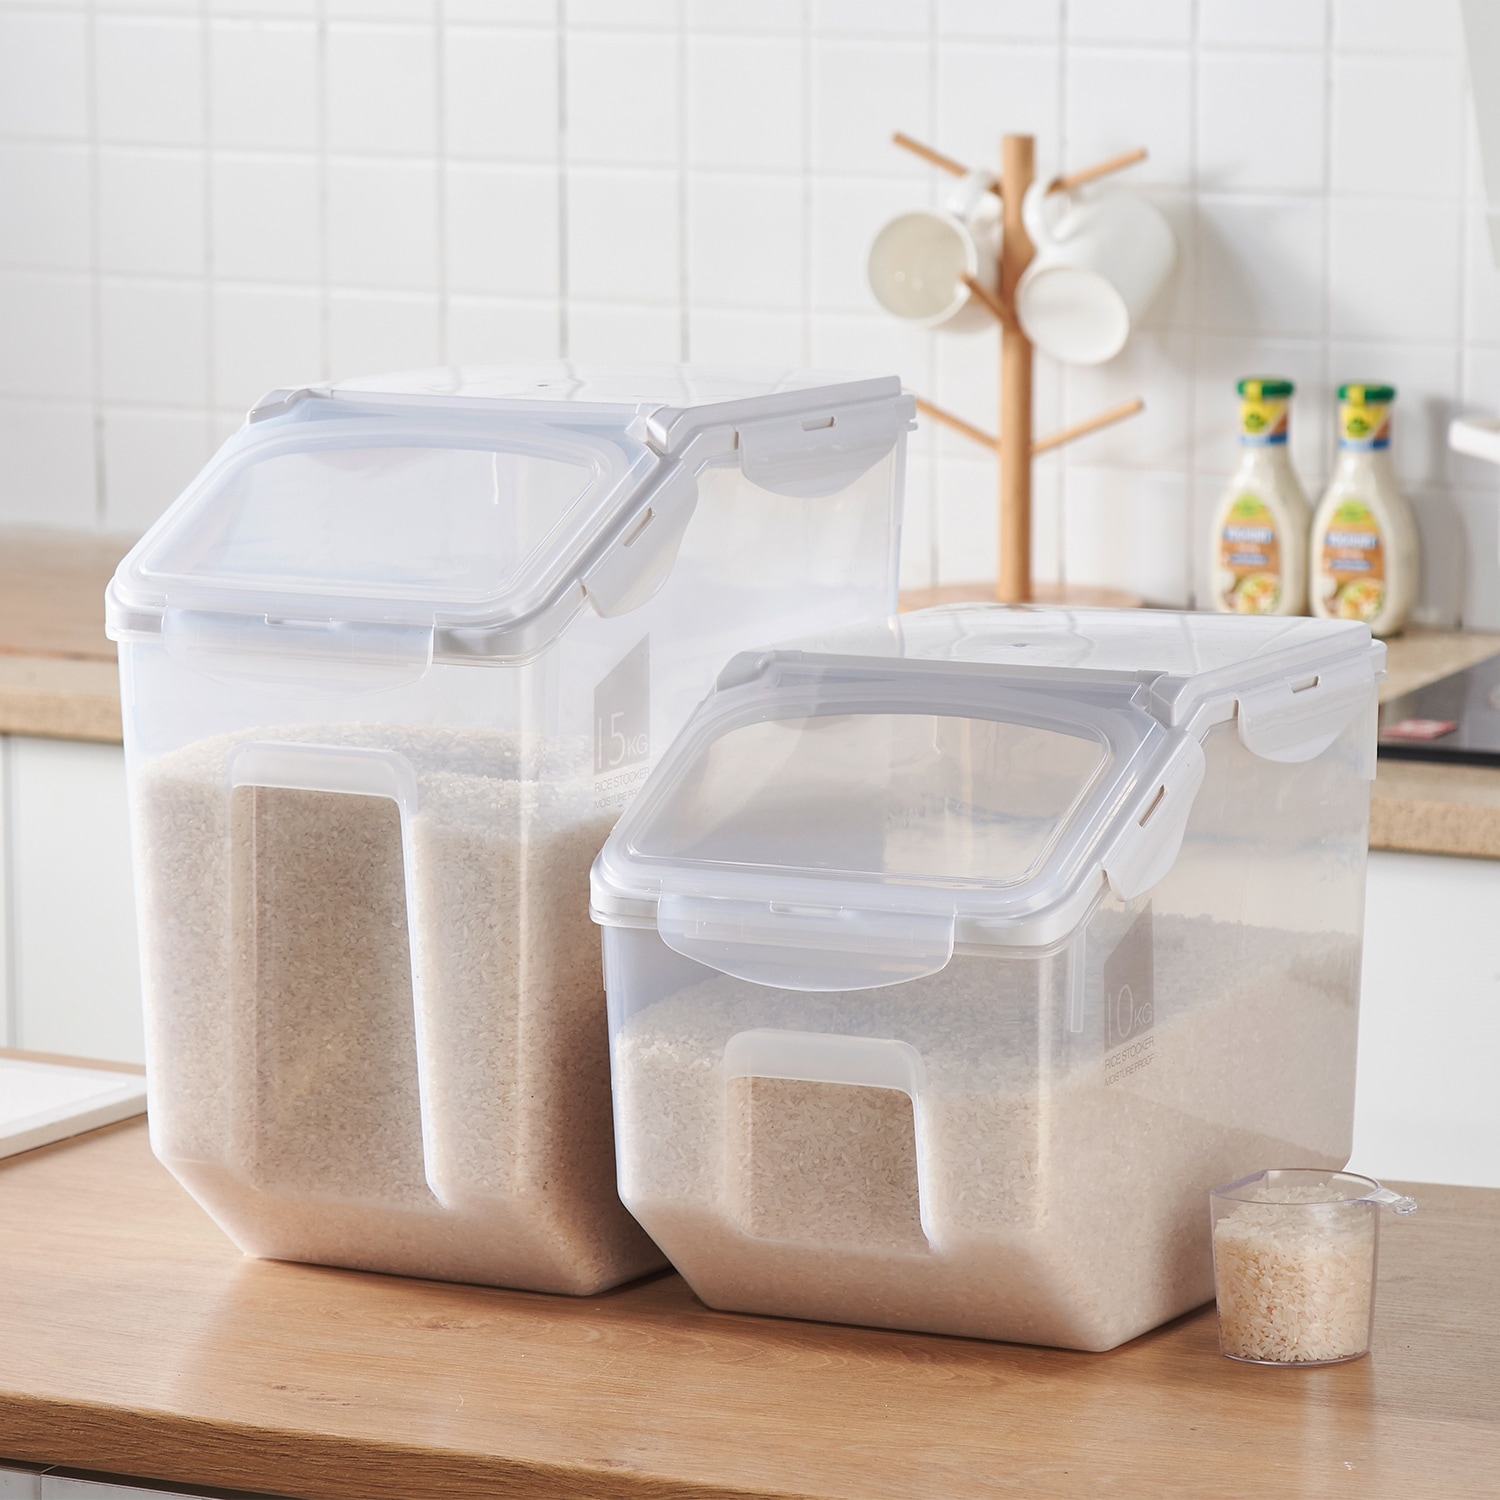 Progressive Flour Keeper Storage Container - 5 Lb. Capacity